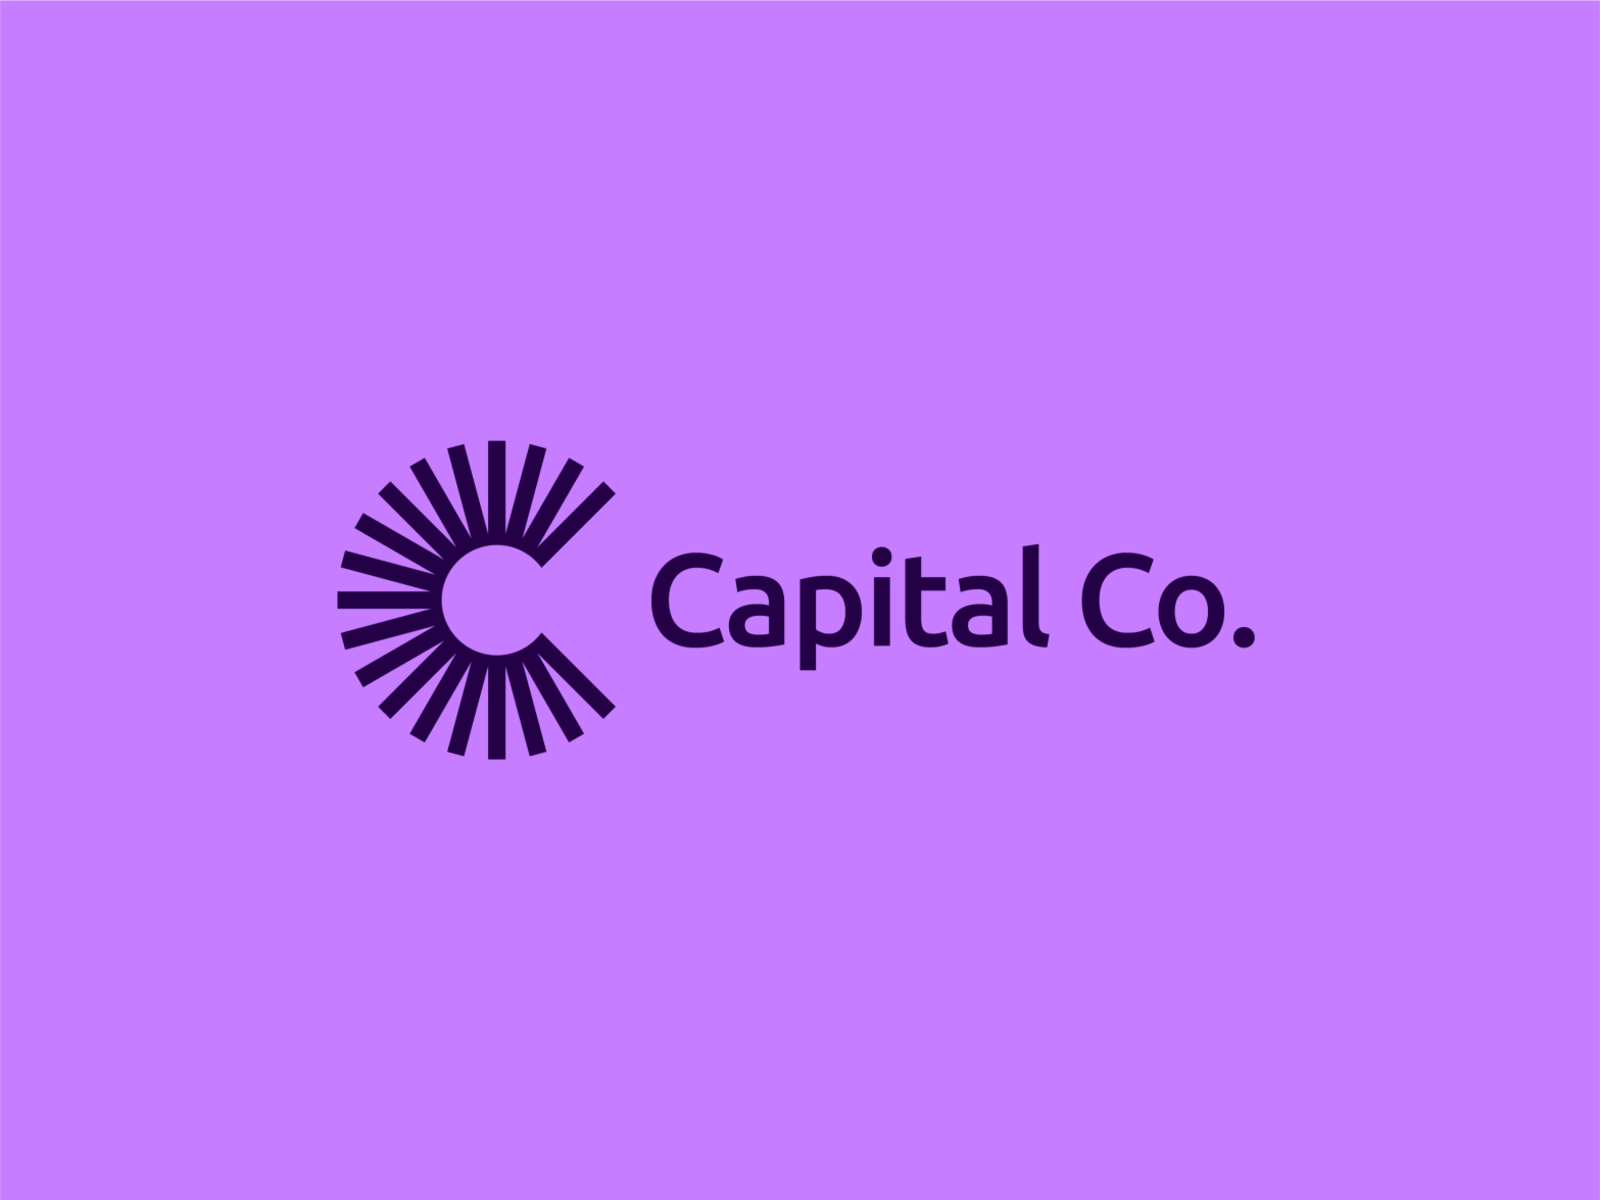 Capital Co. Logo by Dylan Menke on Dribbble